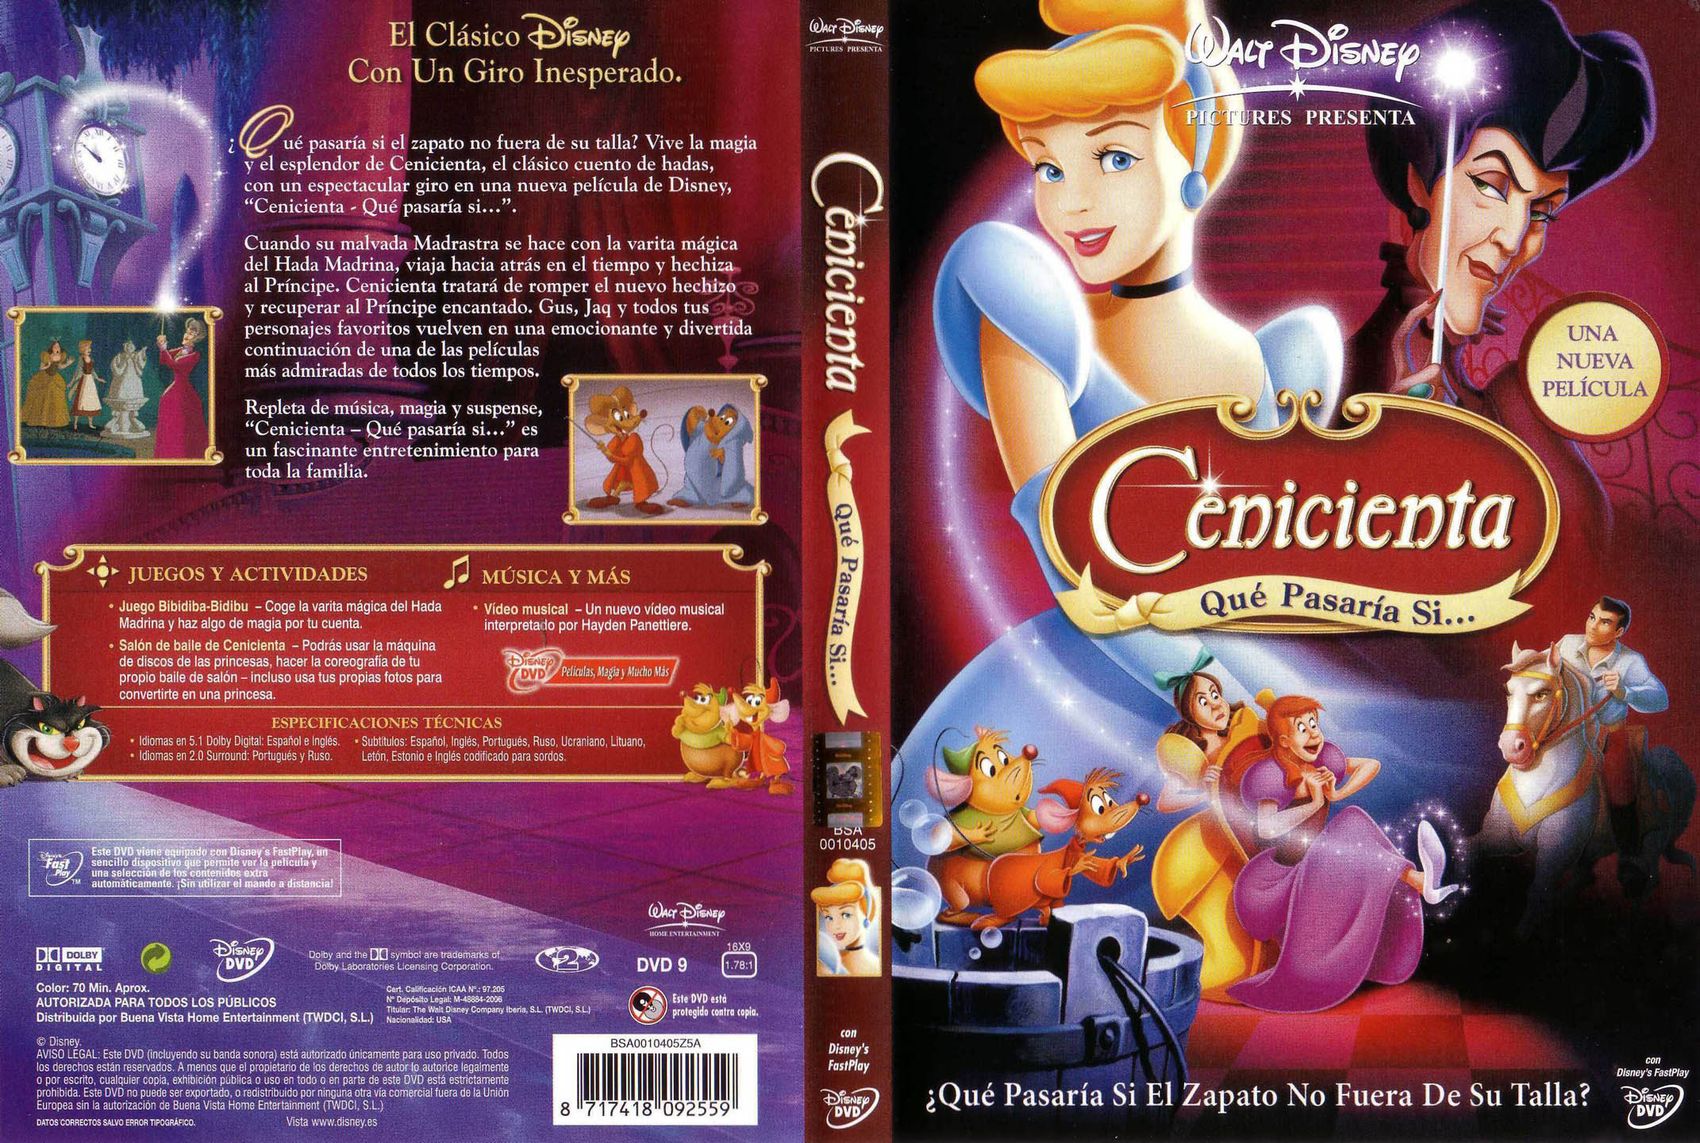 Cenicienta: Qué Pasaría Si... - DVD - Tus Princesas Disney